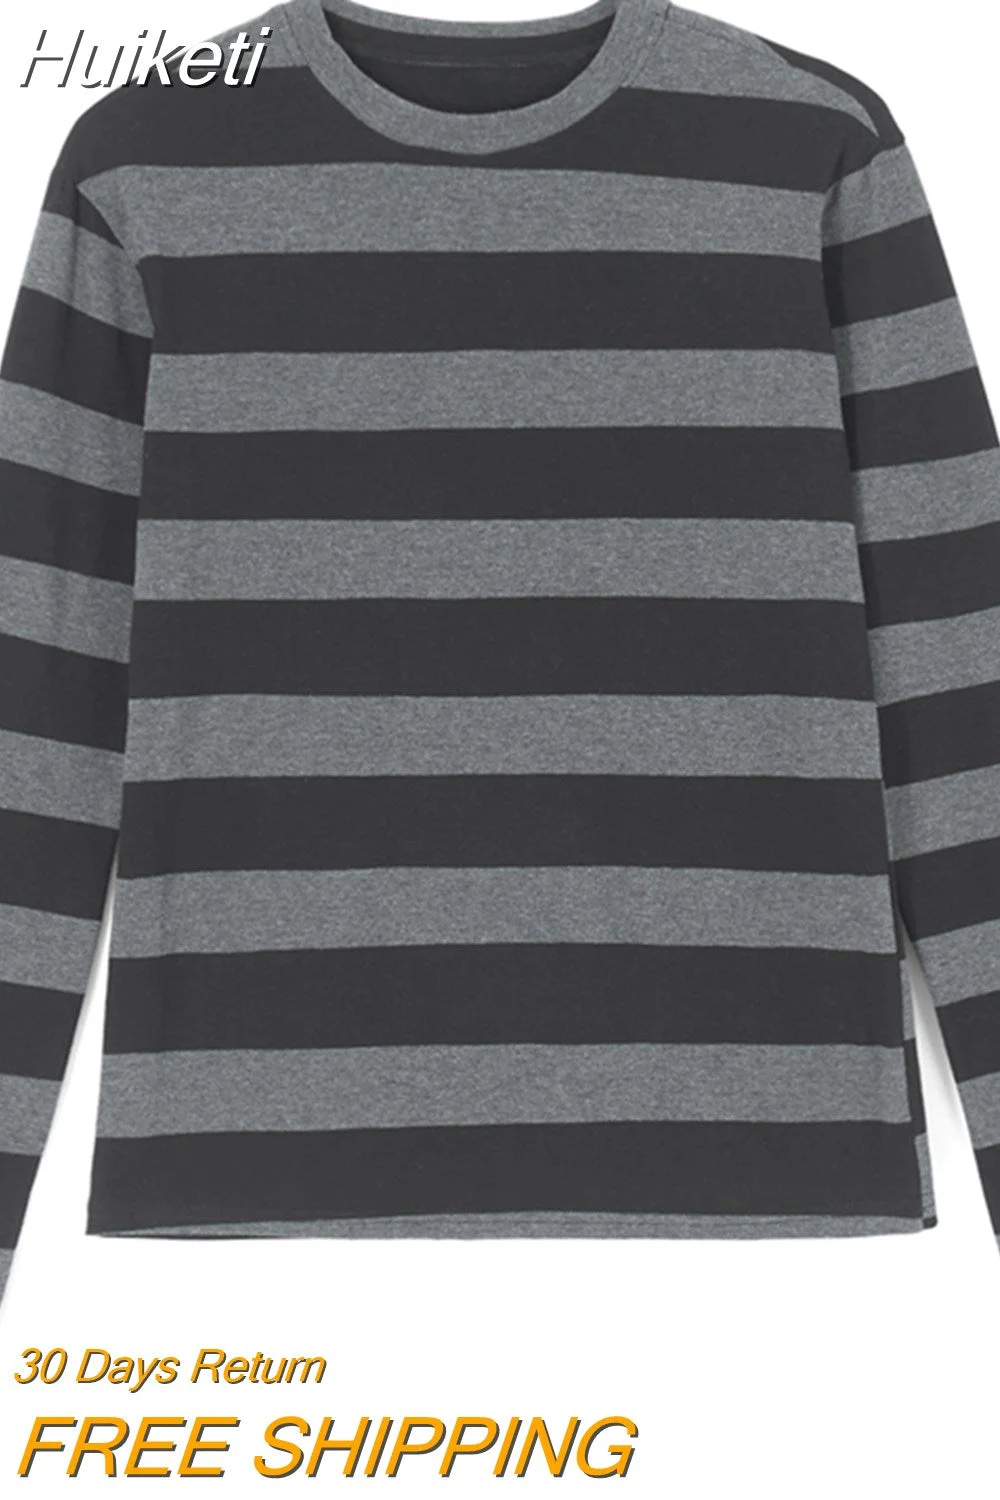 Huiketi Women Y2K 2000s Retro Knit Basic Tee Shirt Casual Grey Black Striped Long Sleeve Round Neck Tops Club Streetwear